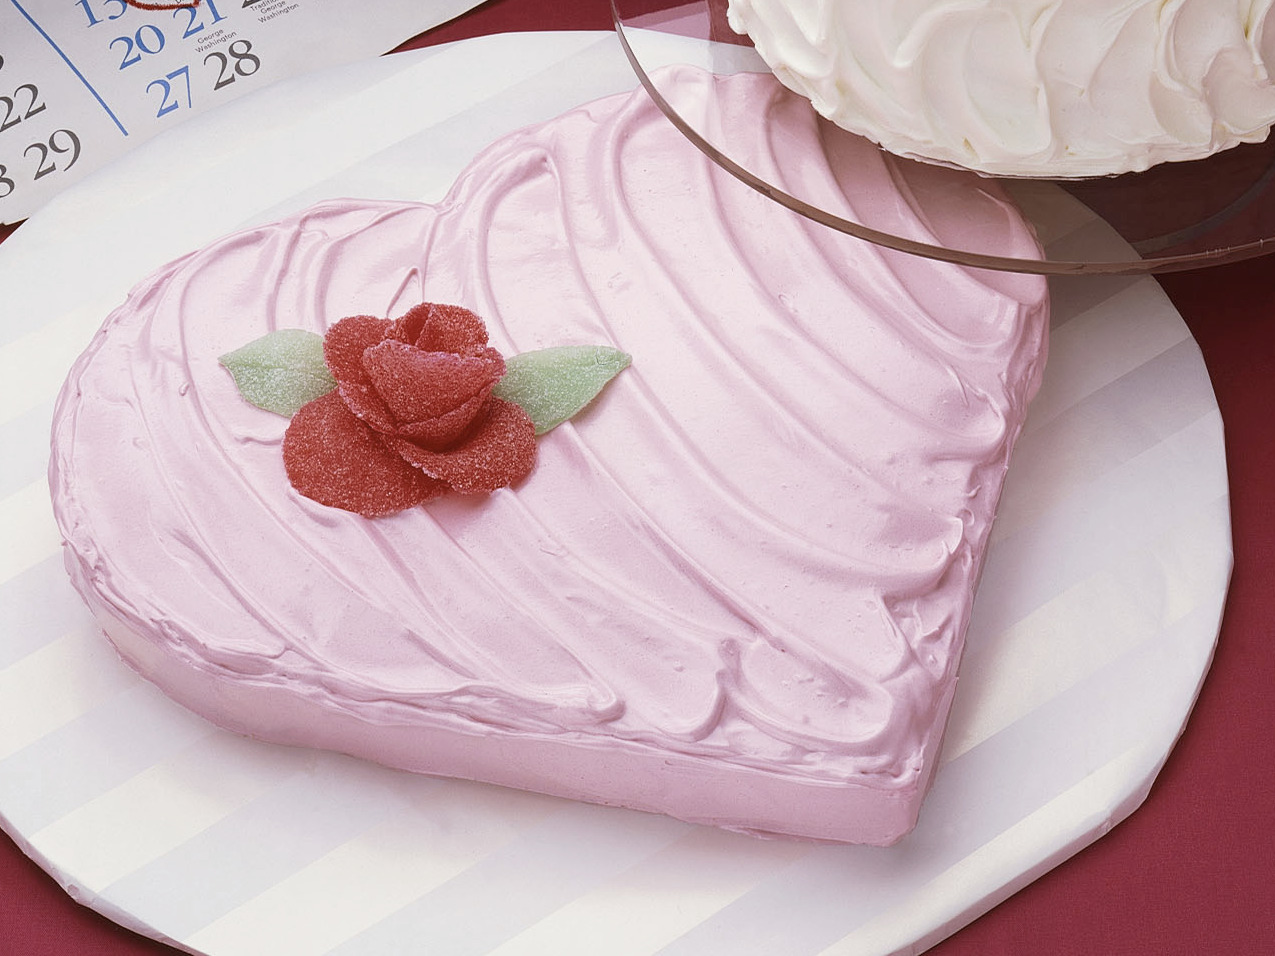 Vintage Heart Cake DIY | How to Make a Pinterest Heart Cake